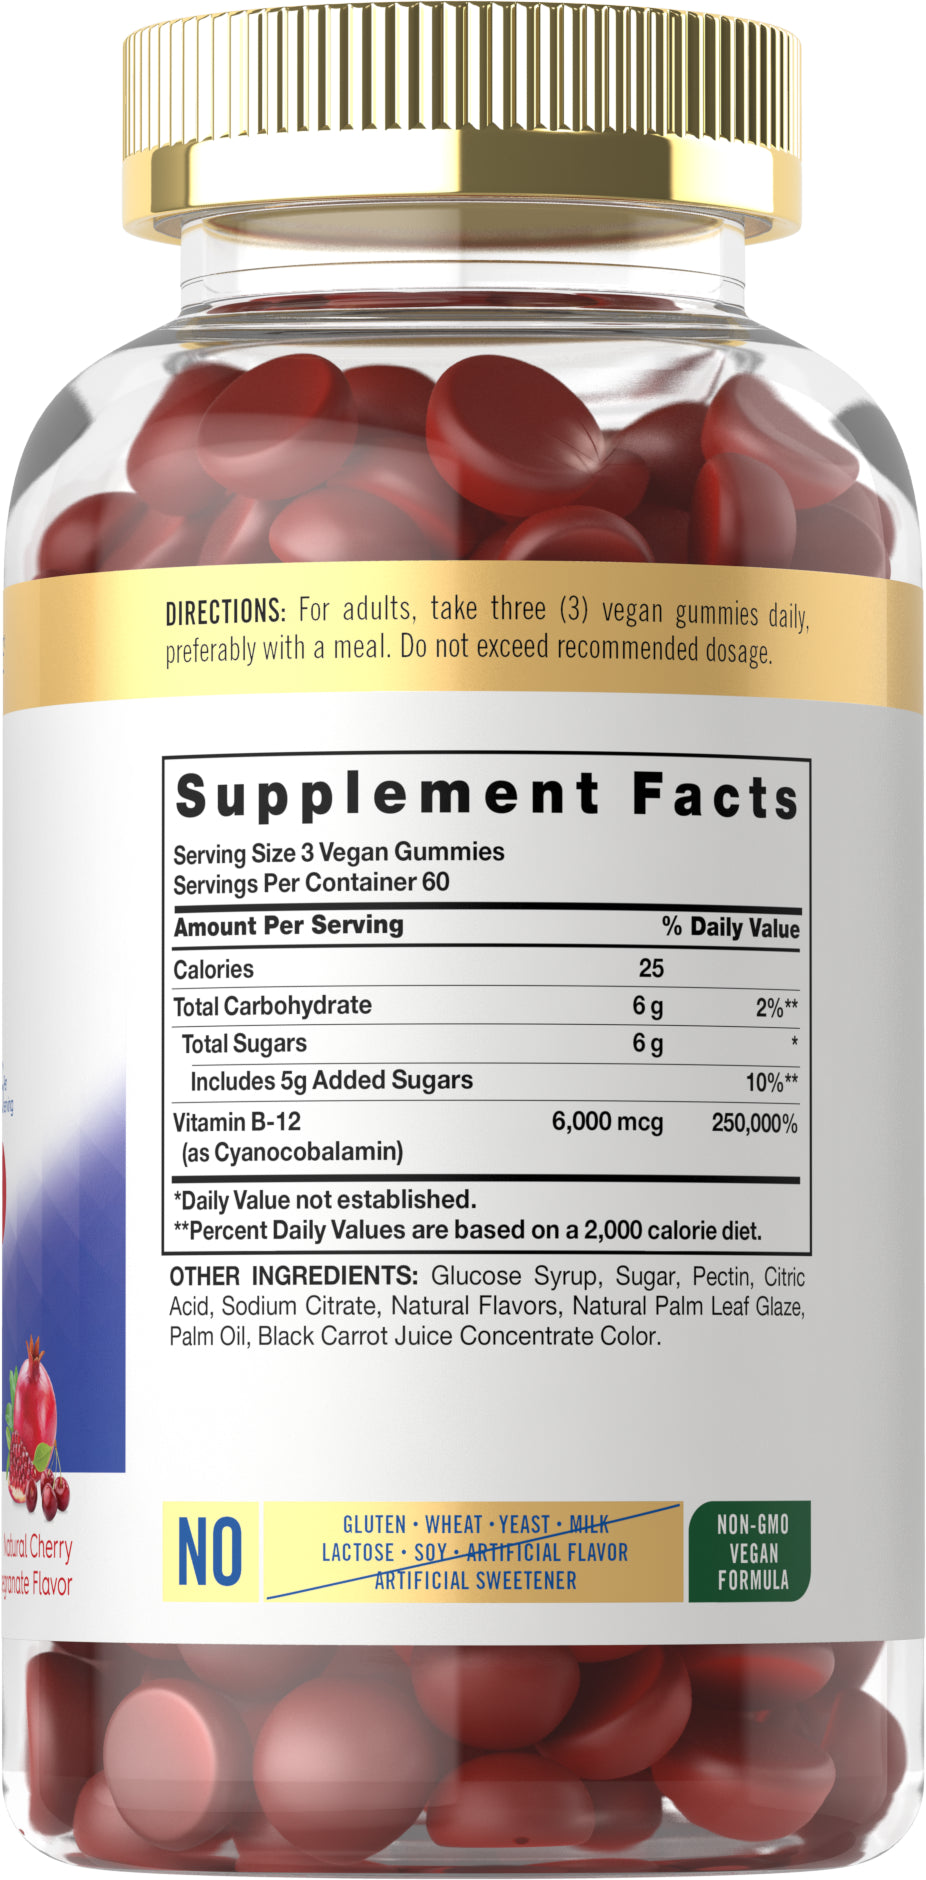 Vitamin B12 Gummies 6000Mcg | 180 Count | Natural Cherry Pomegranate Flavor | Vegan Formula | by Carlyle